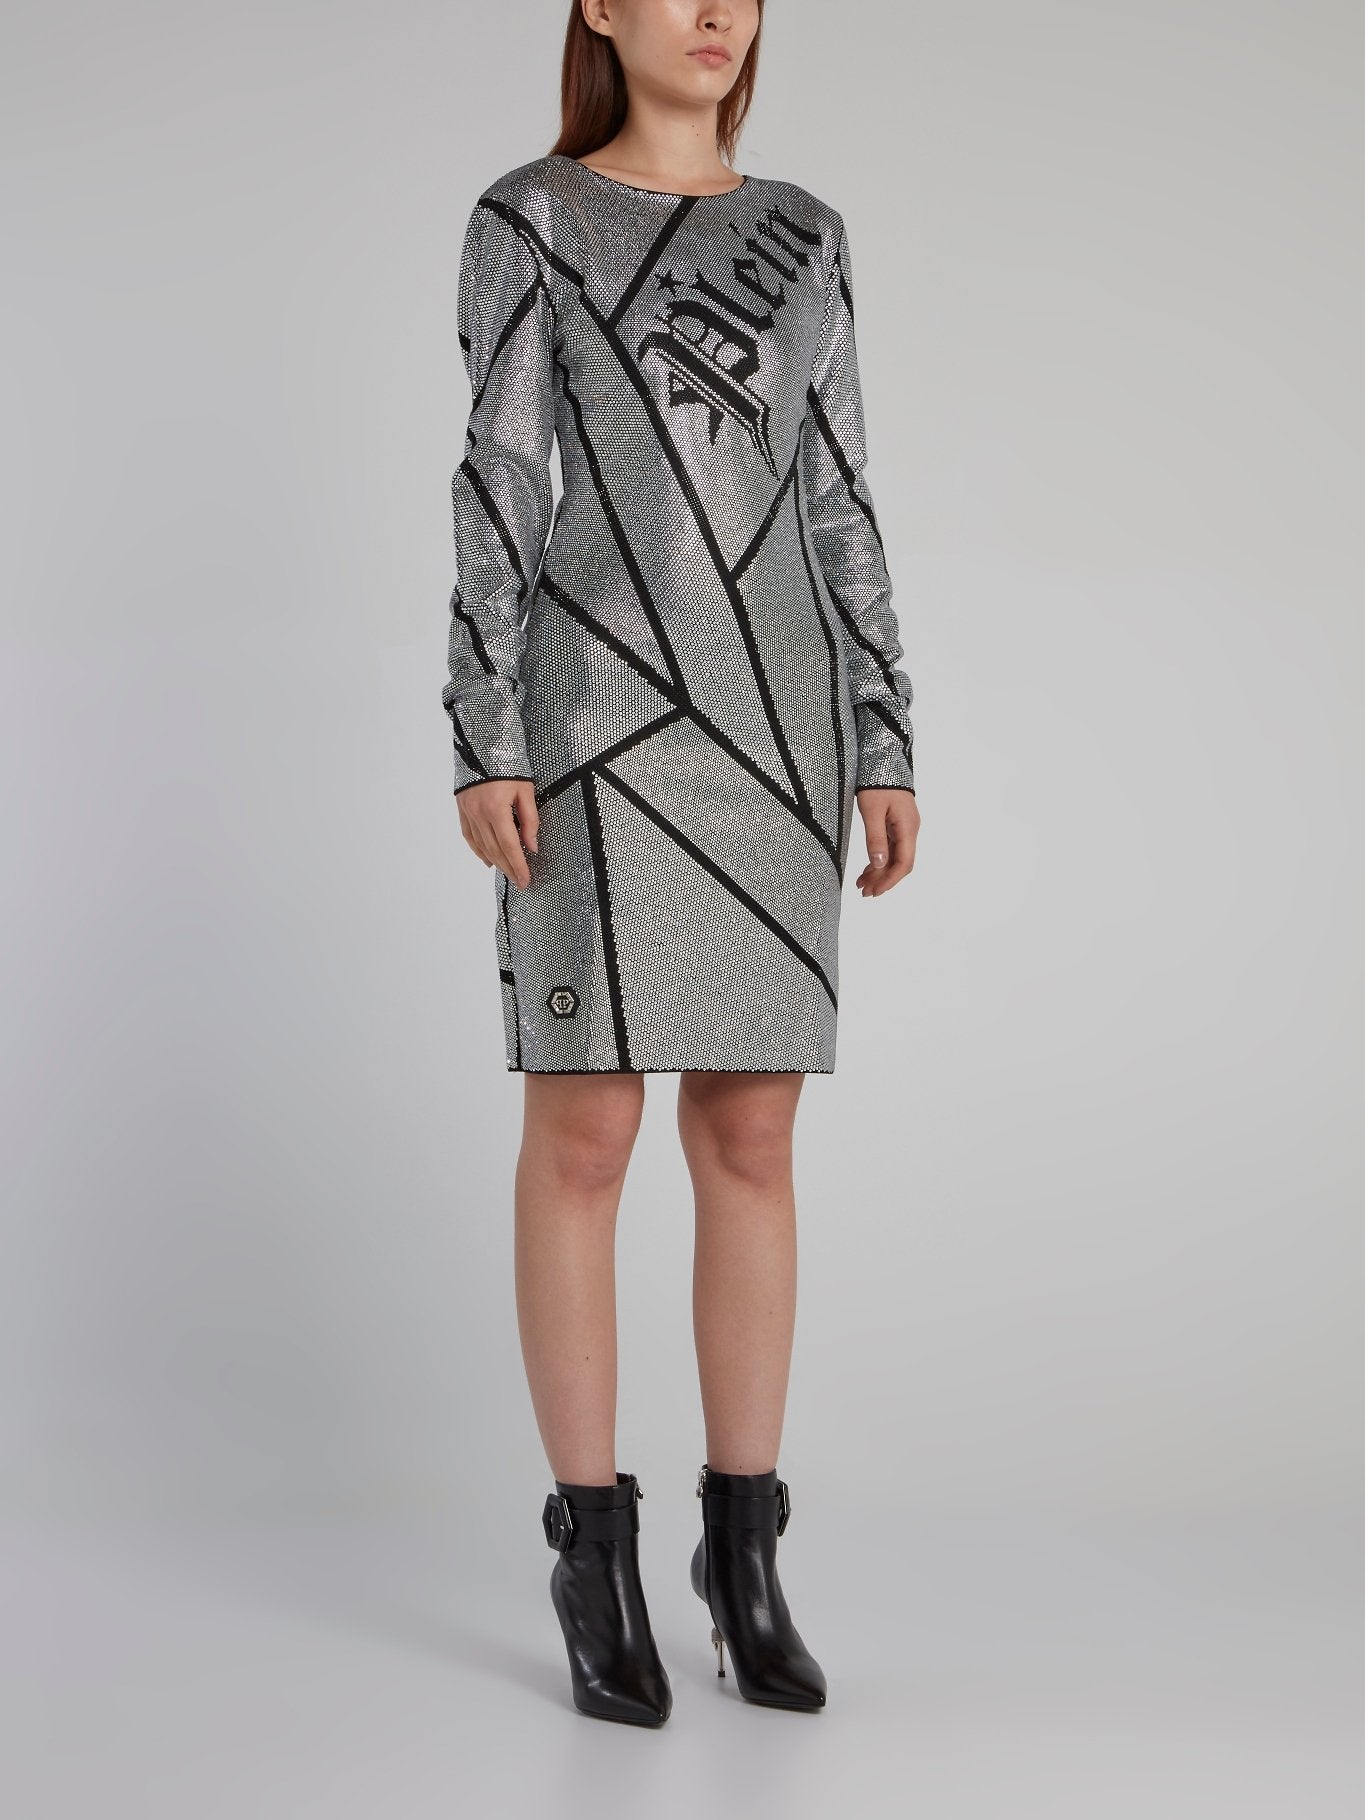 Crystal Studded Geometric Mini Dress